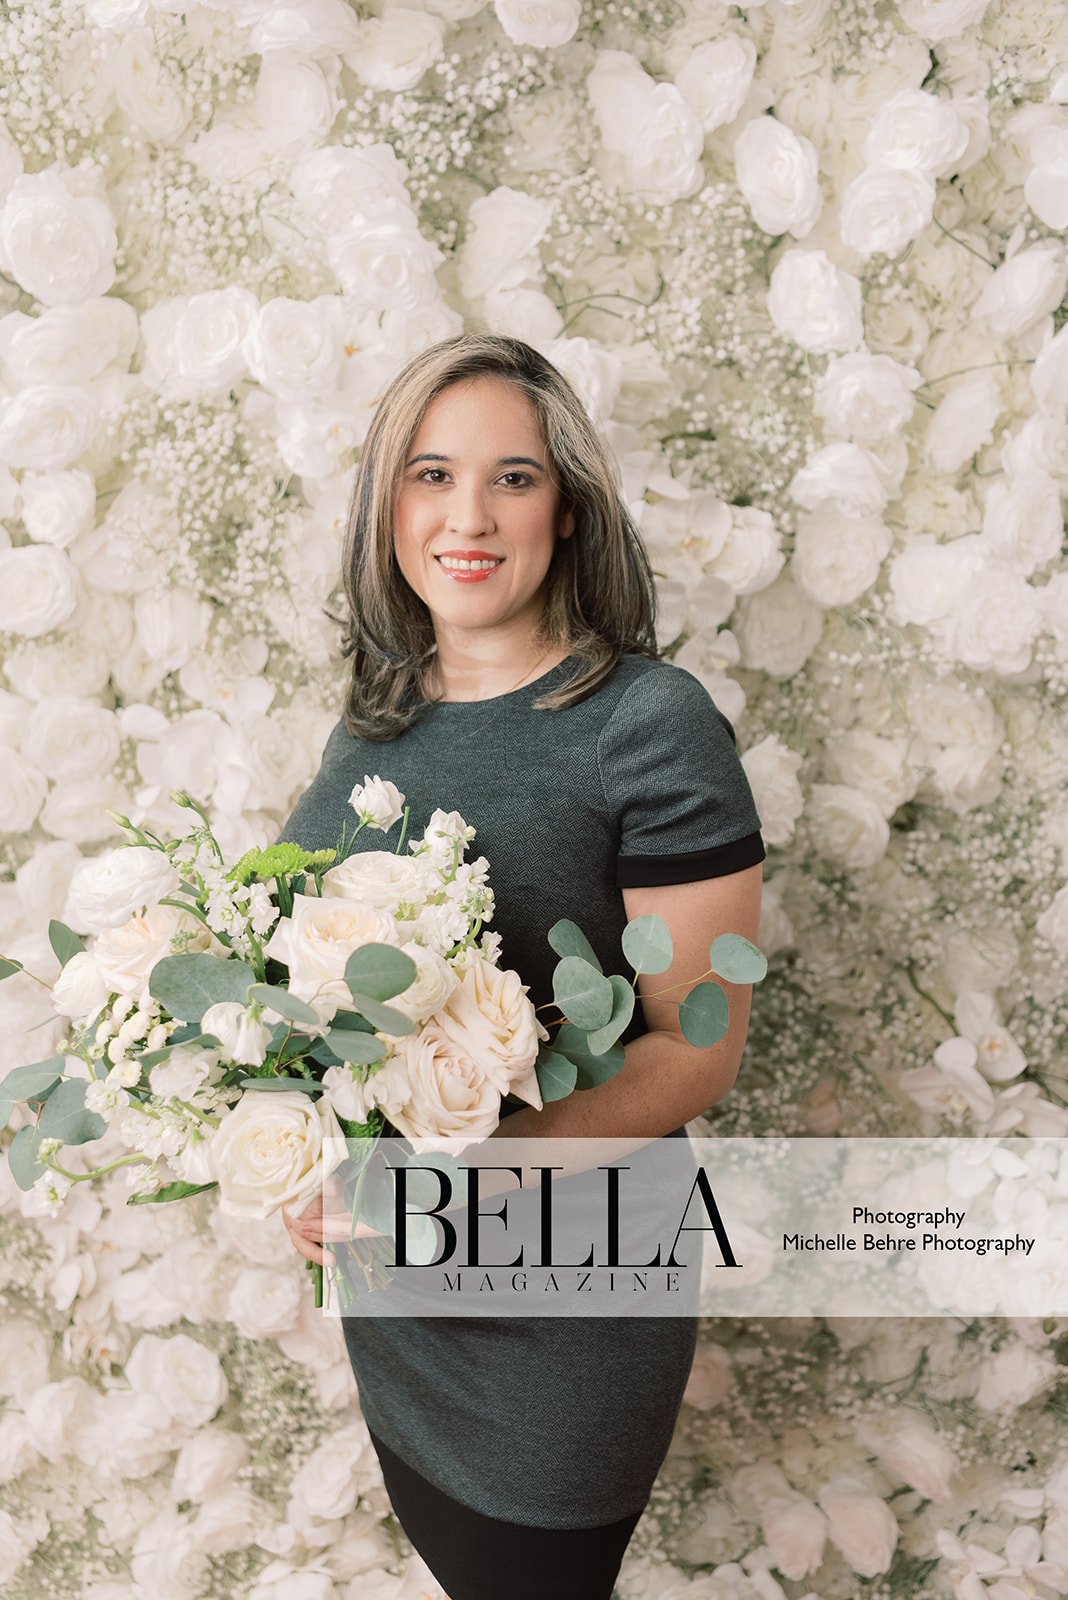 Michelle-Behre-Photography-BELLA-Magazine-Wedding-Event-La-Pulperia-New-York-2.jpg